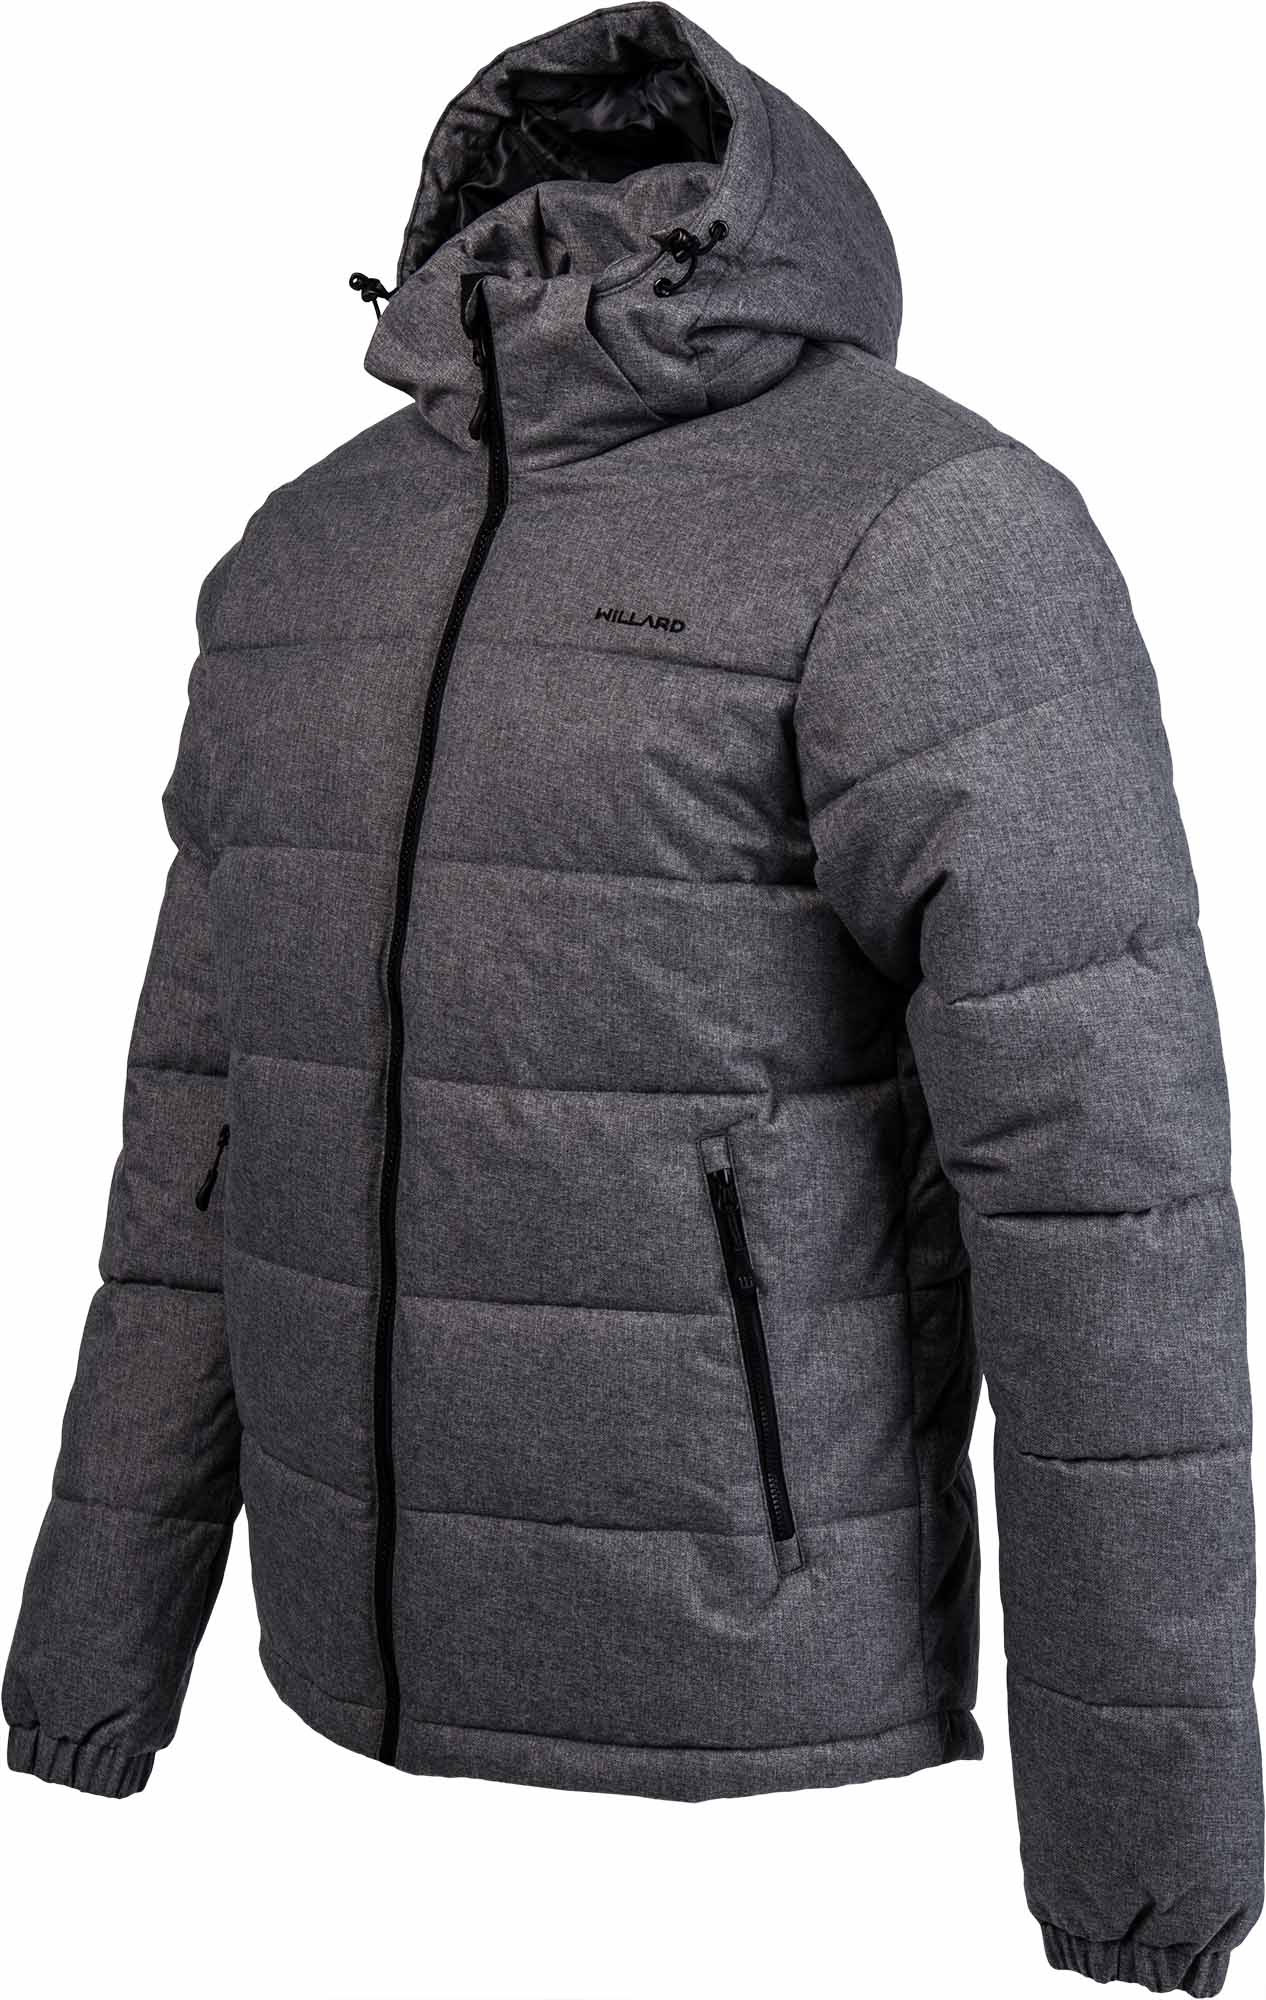 Men’s quilted jacket